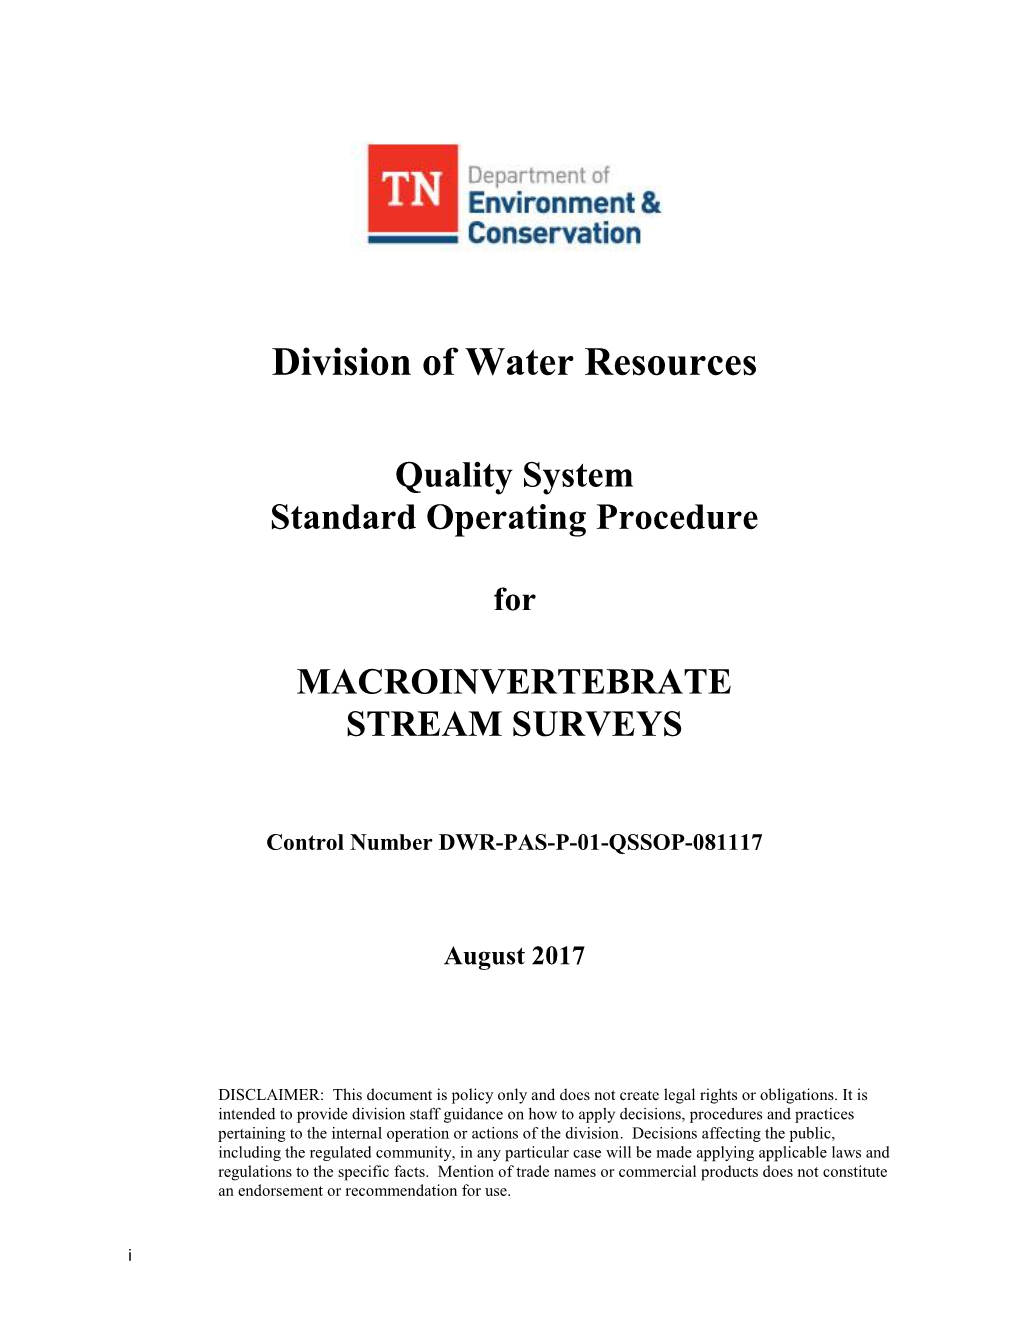 Quality System Standard Operating Procedure for Macroinvertebrate Stream Surveys